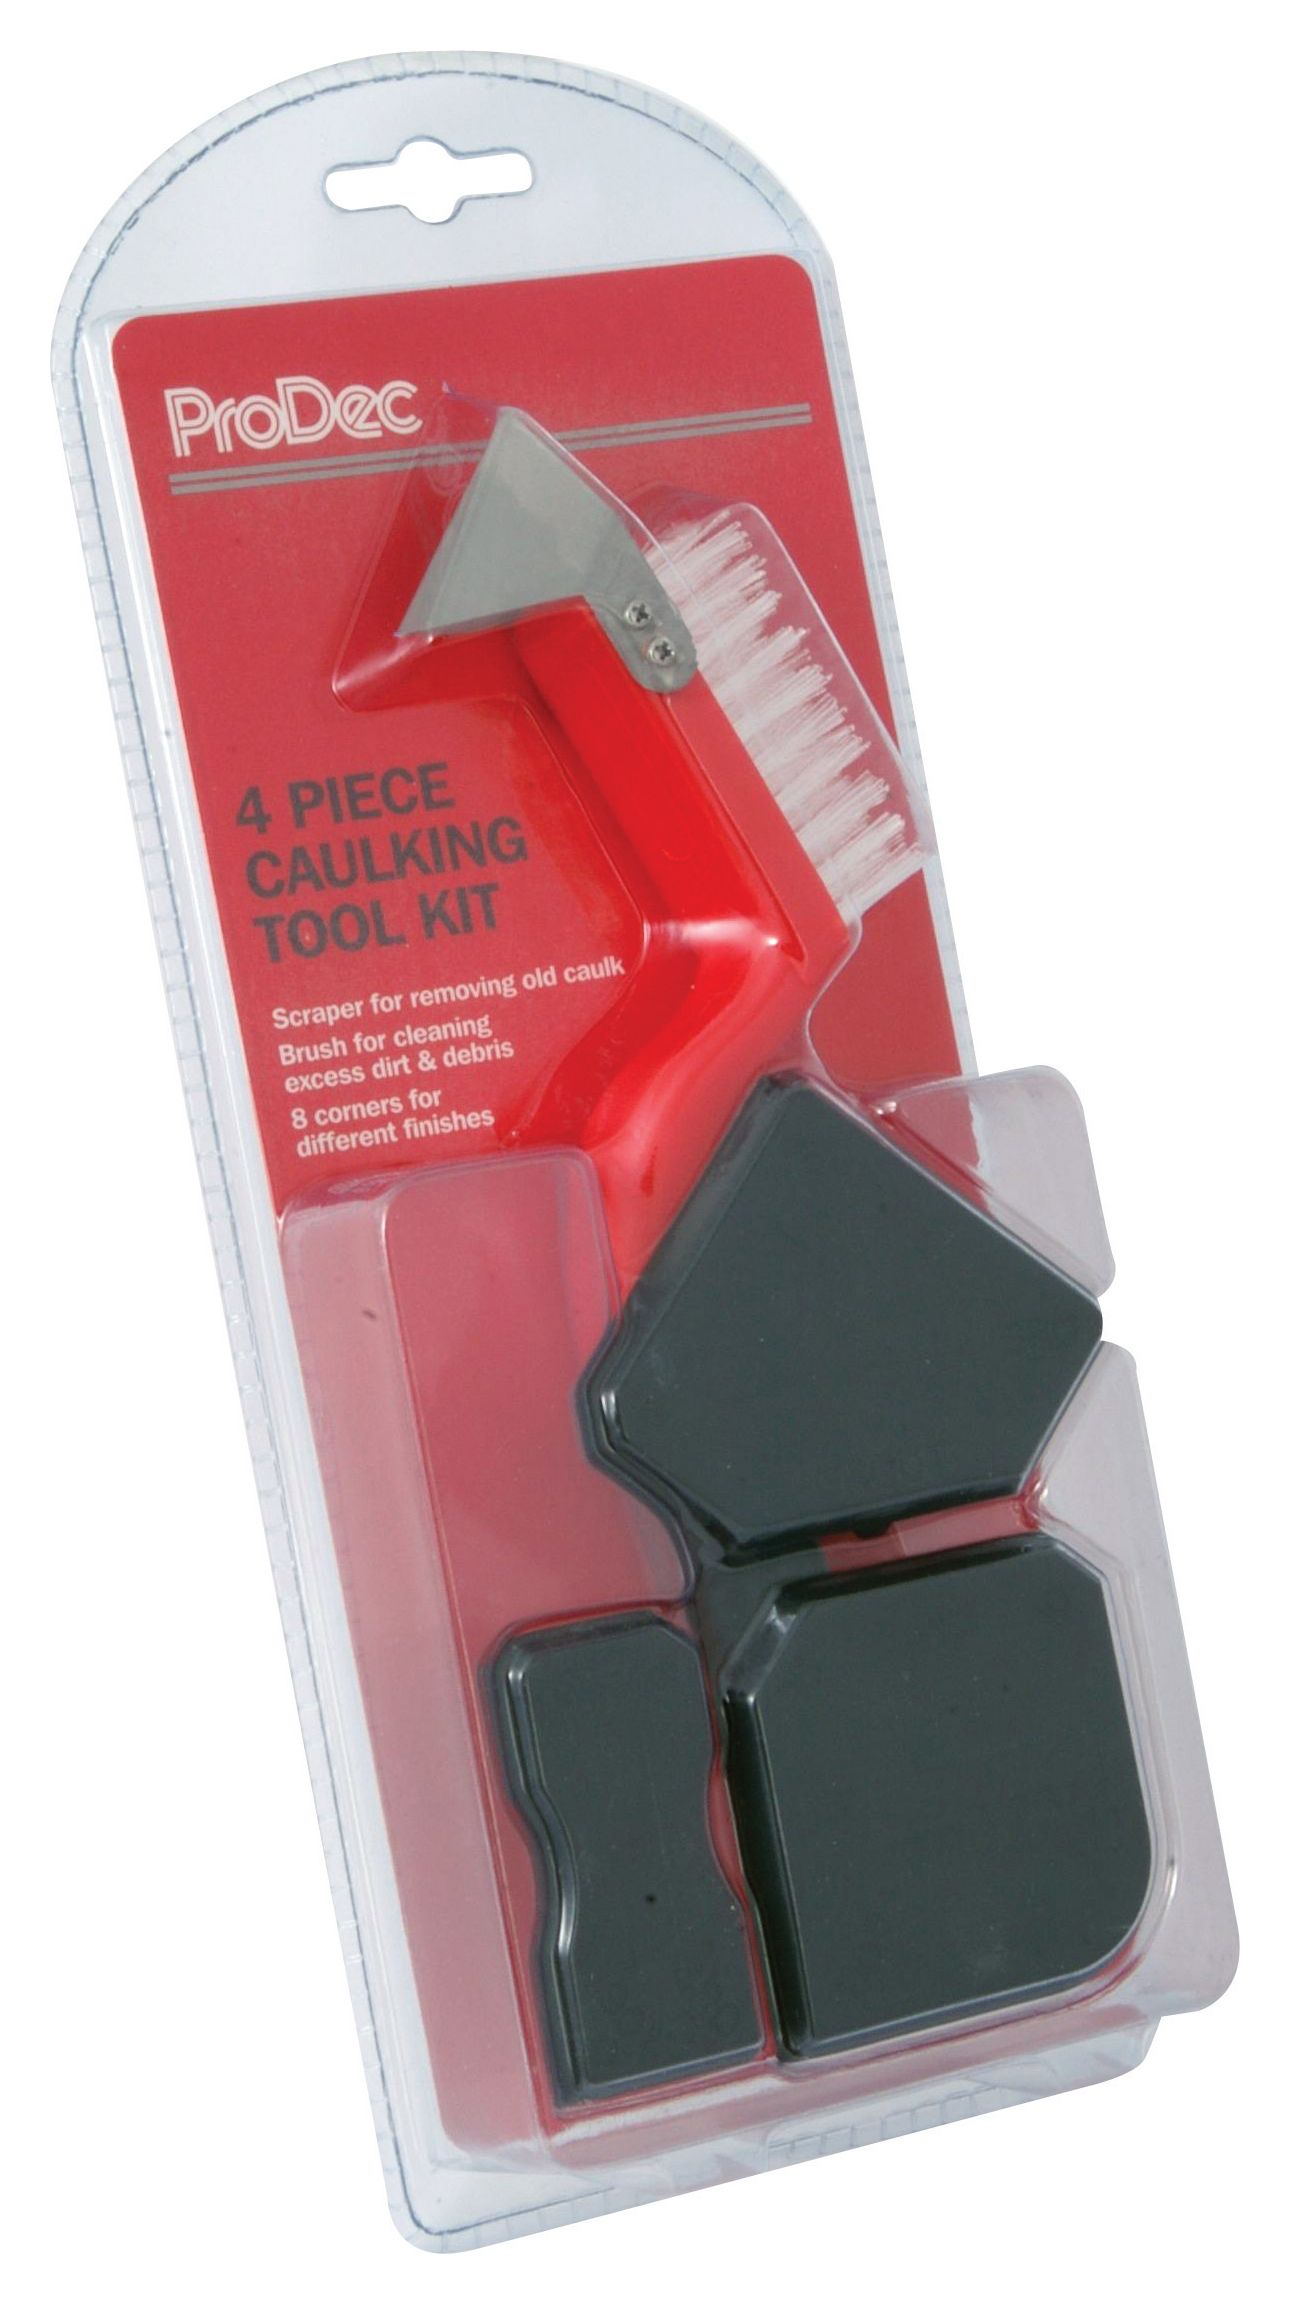 Image of ProDec 4 Piece Caulking Tool Kit